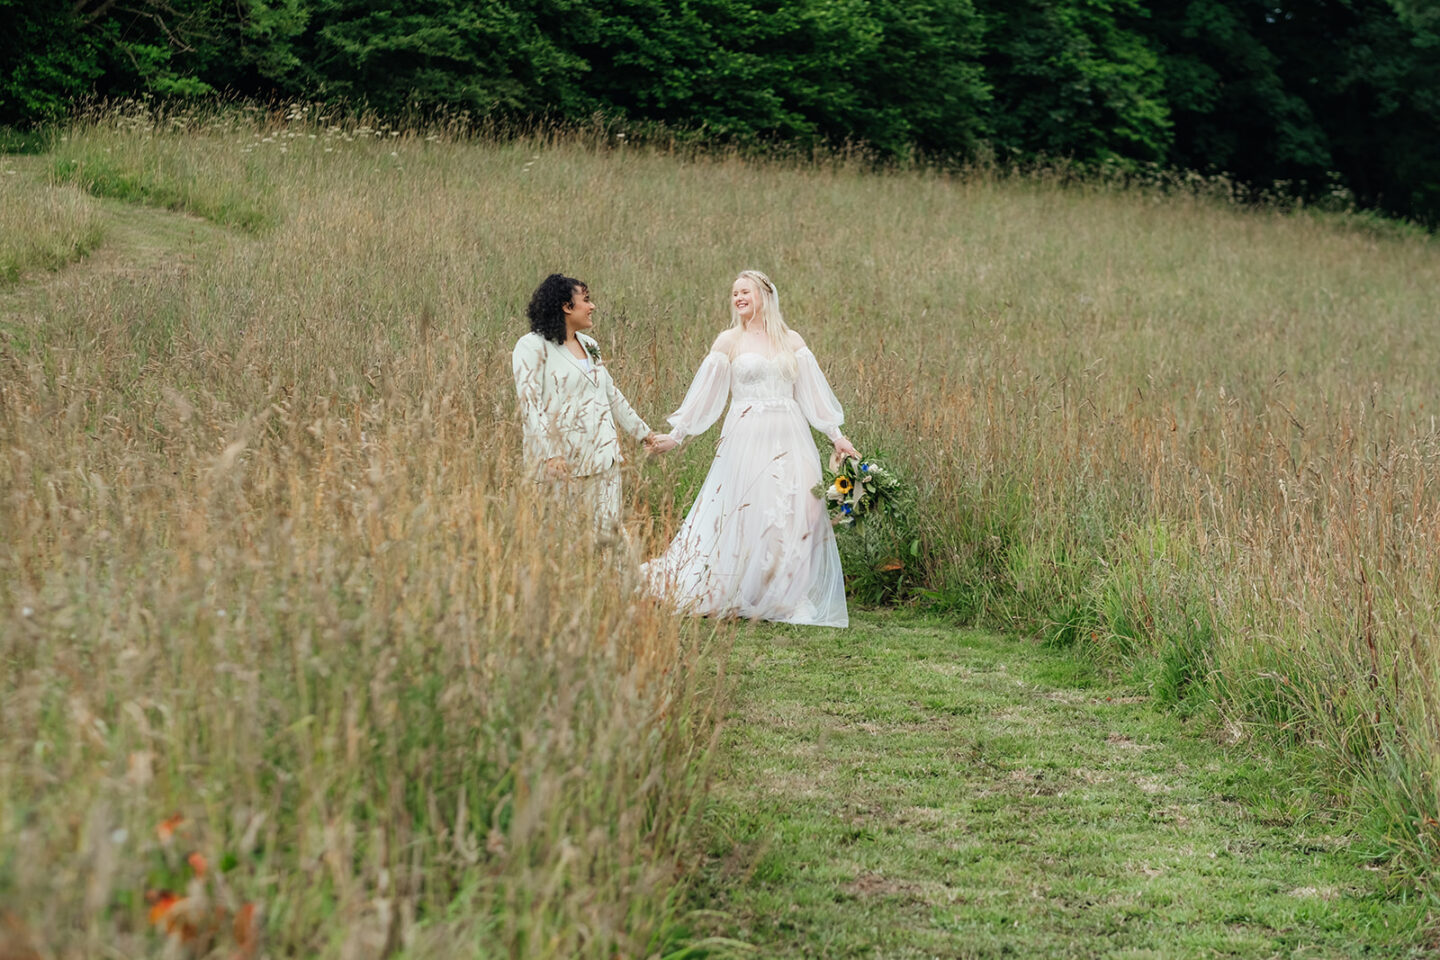 Colourful LGBTQ+ Meadow Wedding At Kilminorth Cornwall